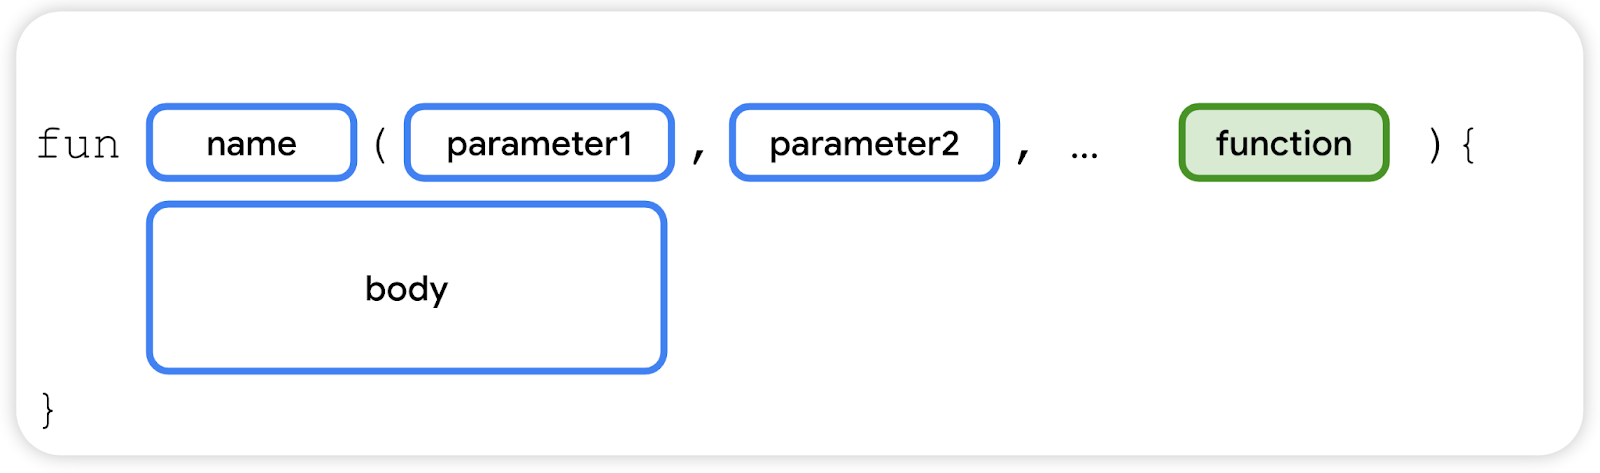 function parameter is the last parameter